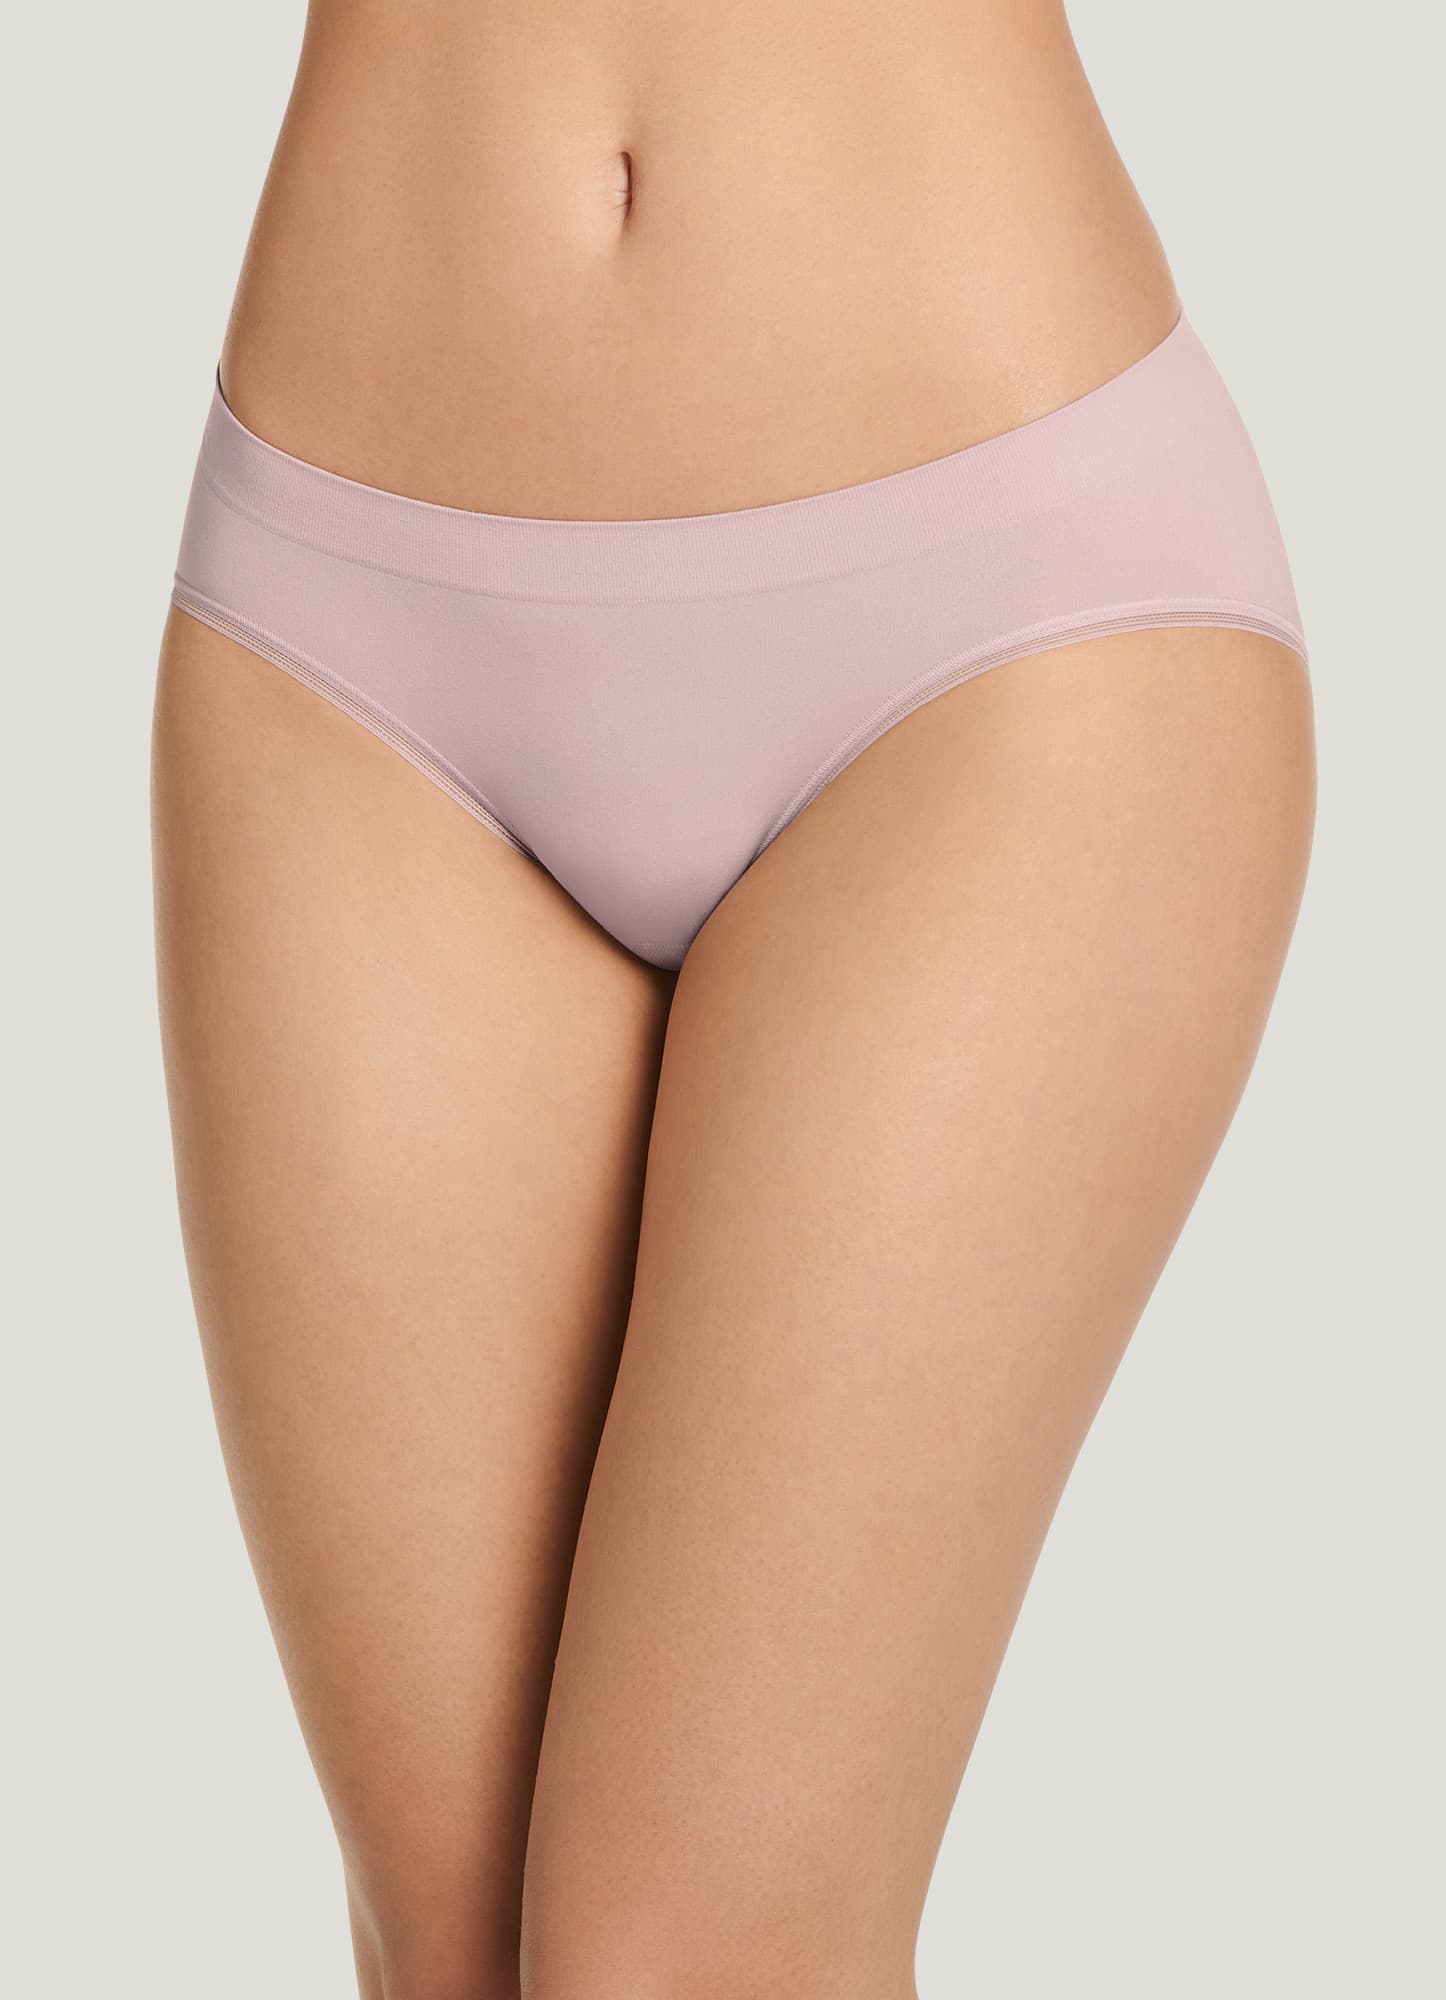 Jockey Women's Underwear Air Soft Touch Bikini - Discount Scrubs